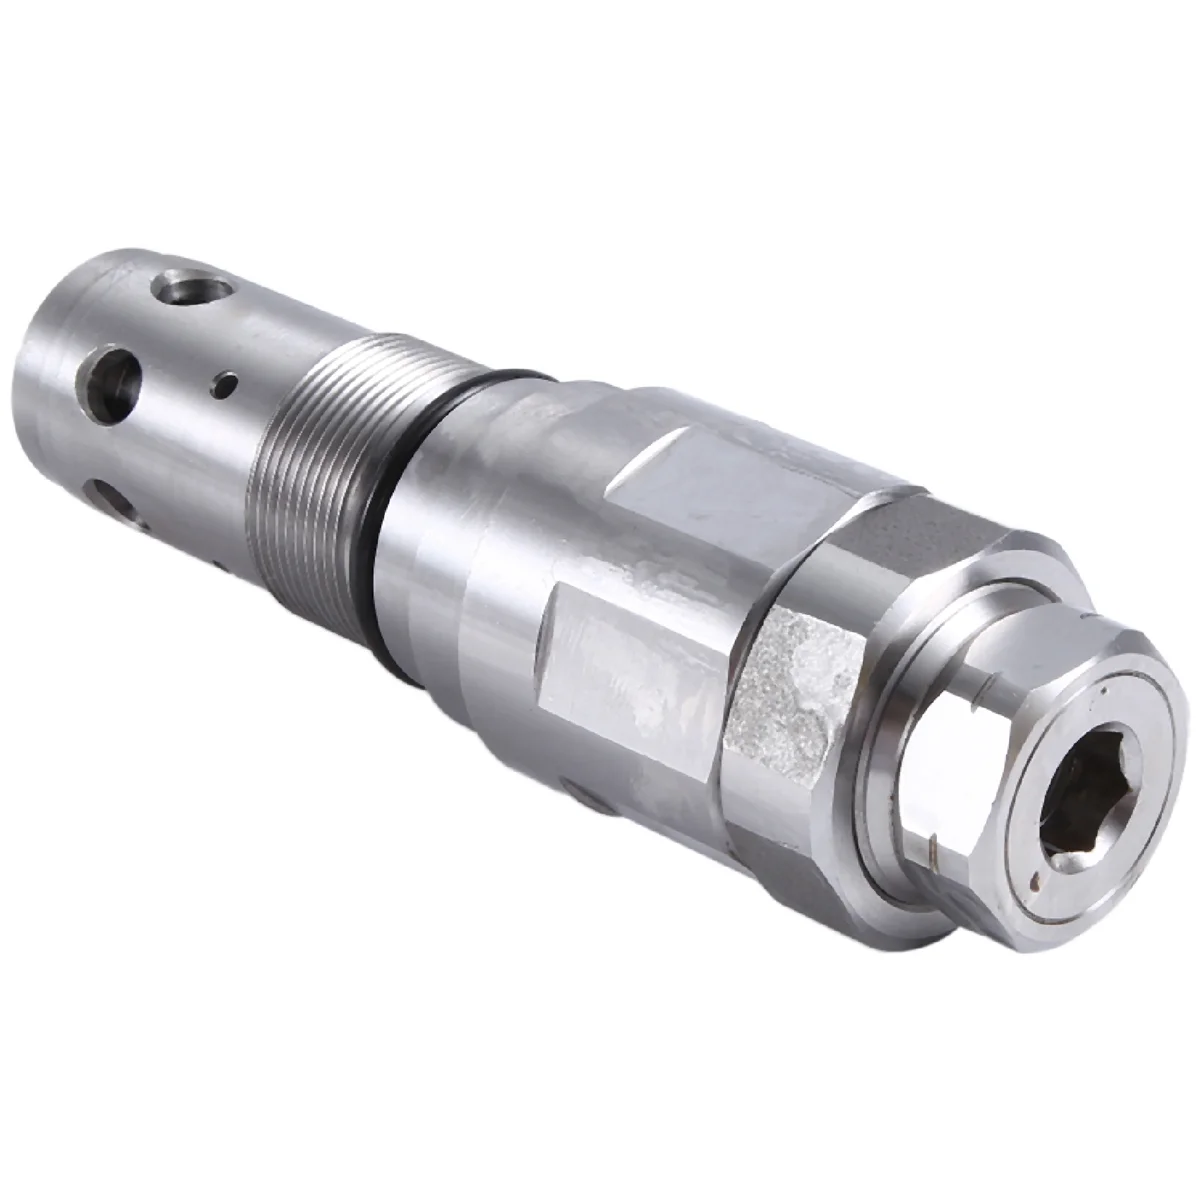 Гидравлический предохранительный клапан для экскаватора Kobelco EX200-5 ZAX200 ZAX240-3 SK200-6 SK200-6E DH200-5 4386065 YN22V00014F1 - 5